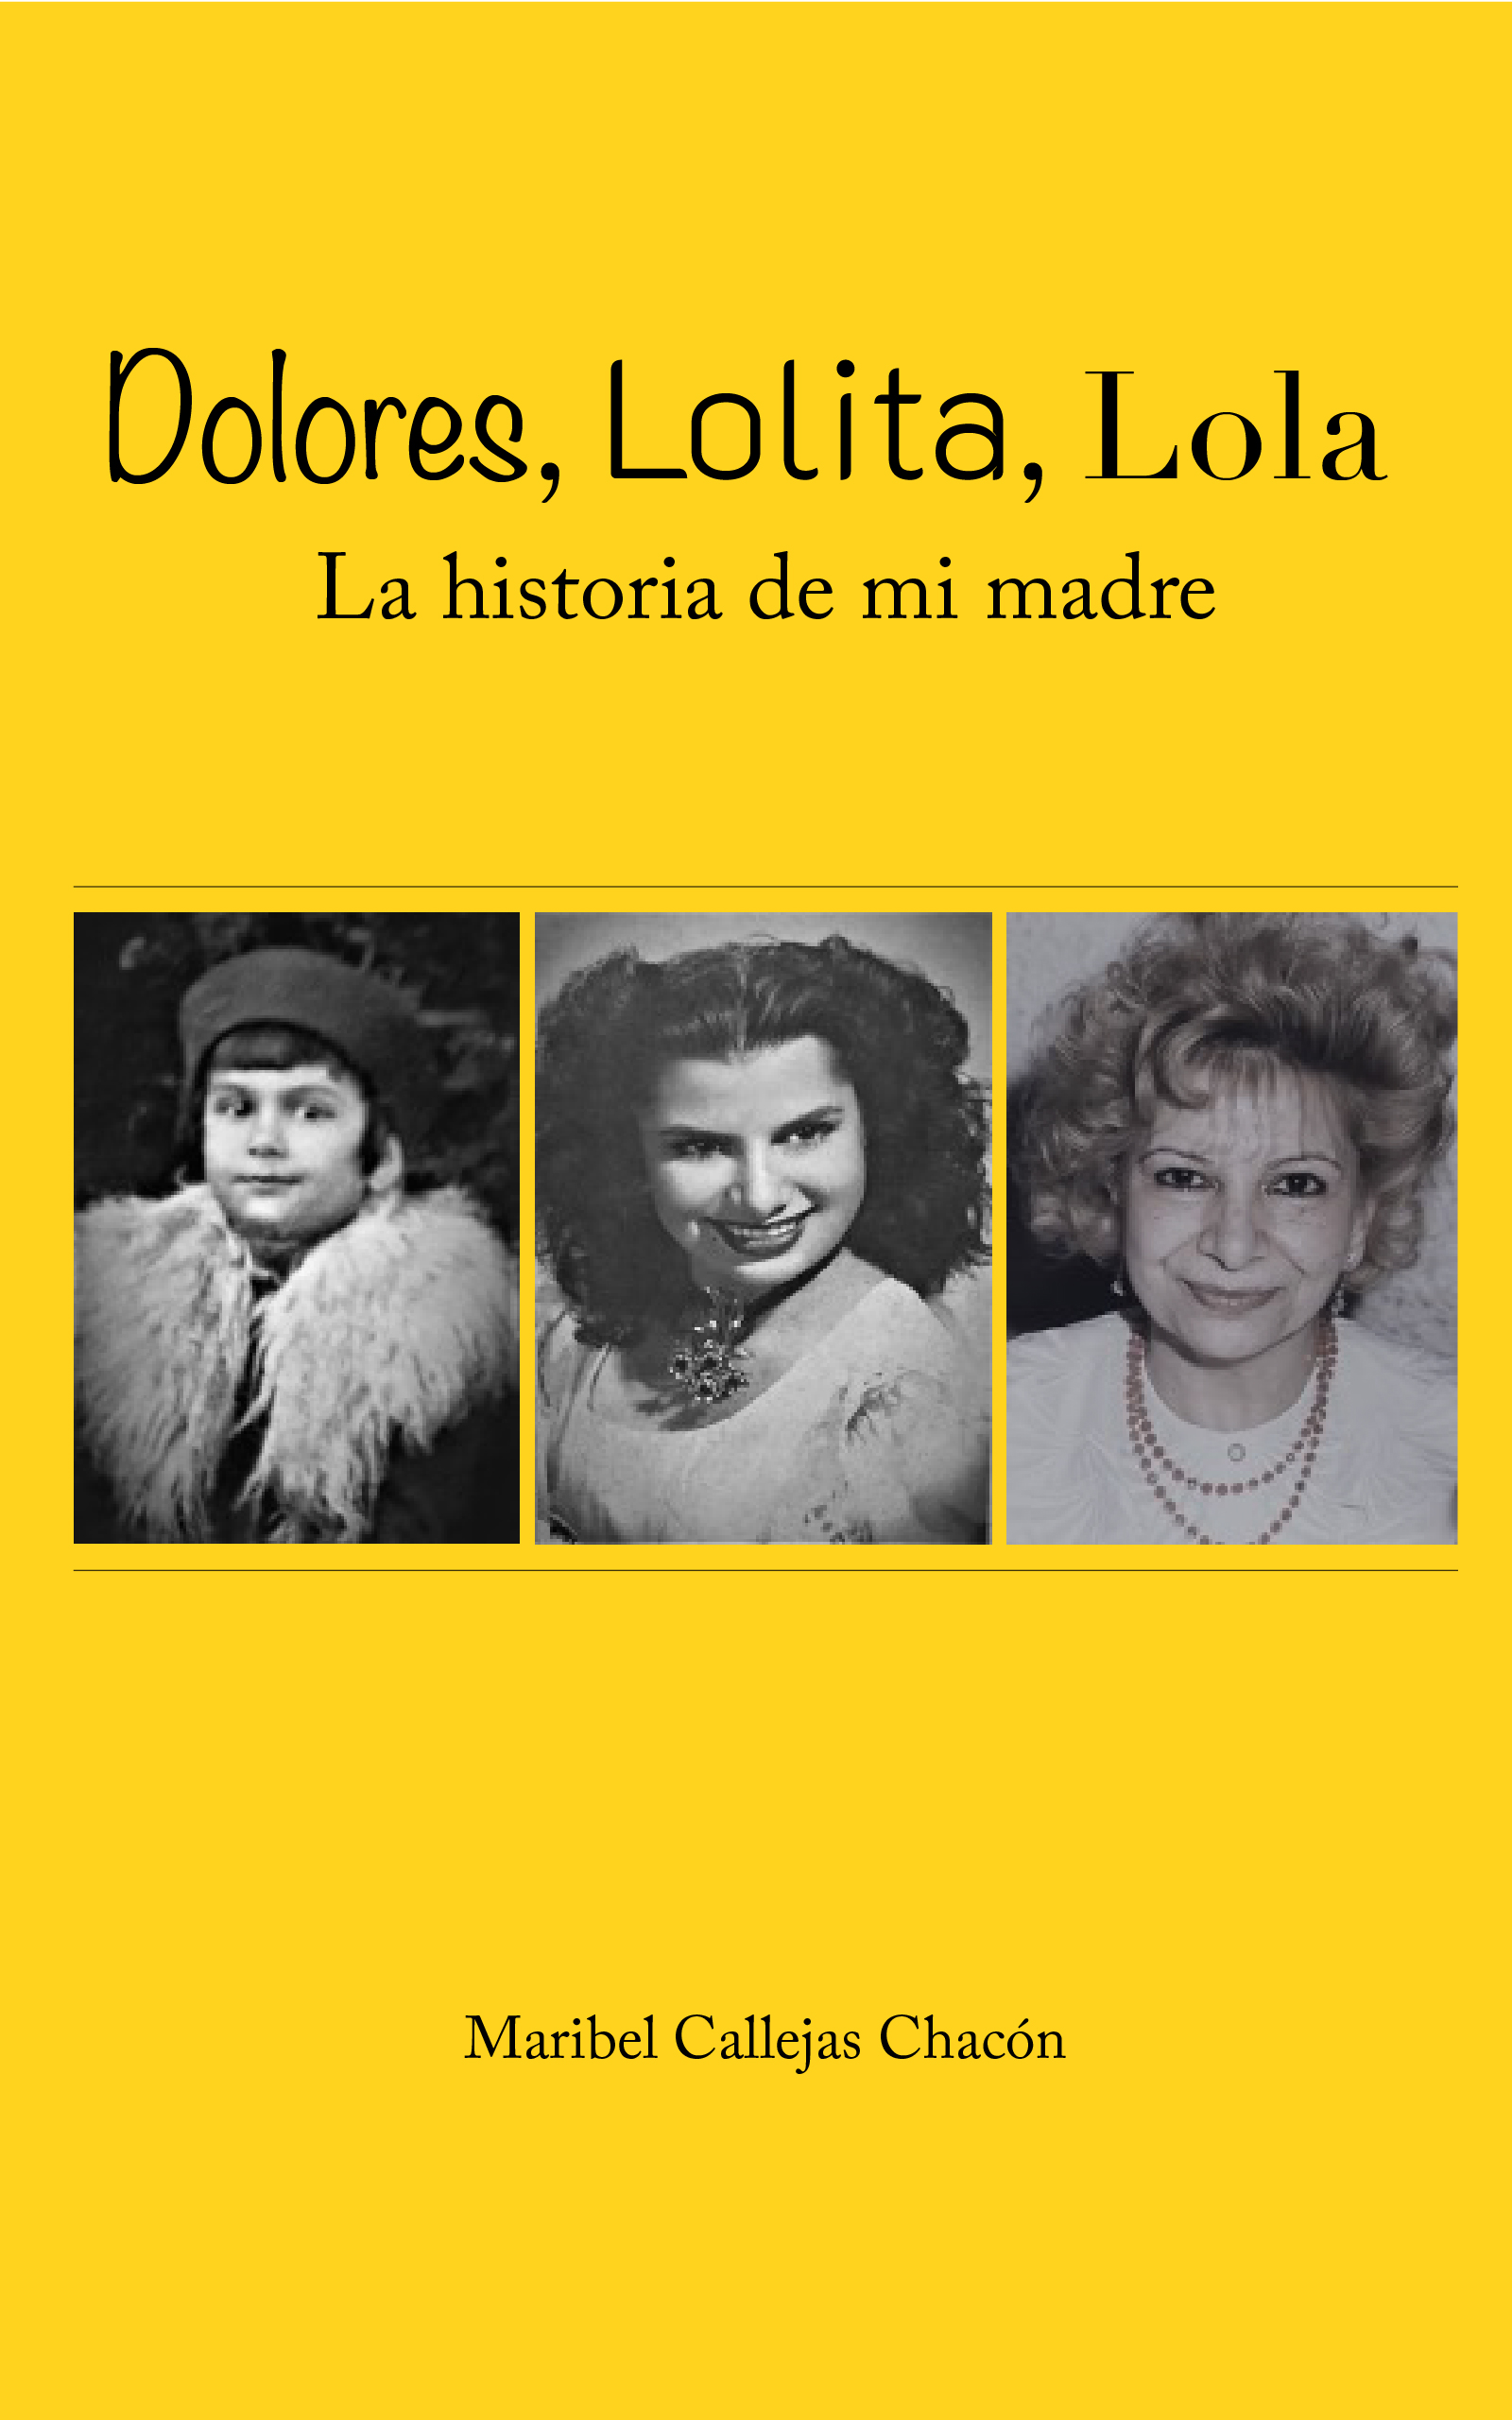 Dolores, Lolita, Lola, de Maribel Callejas